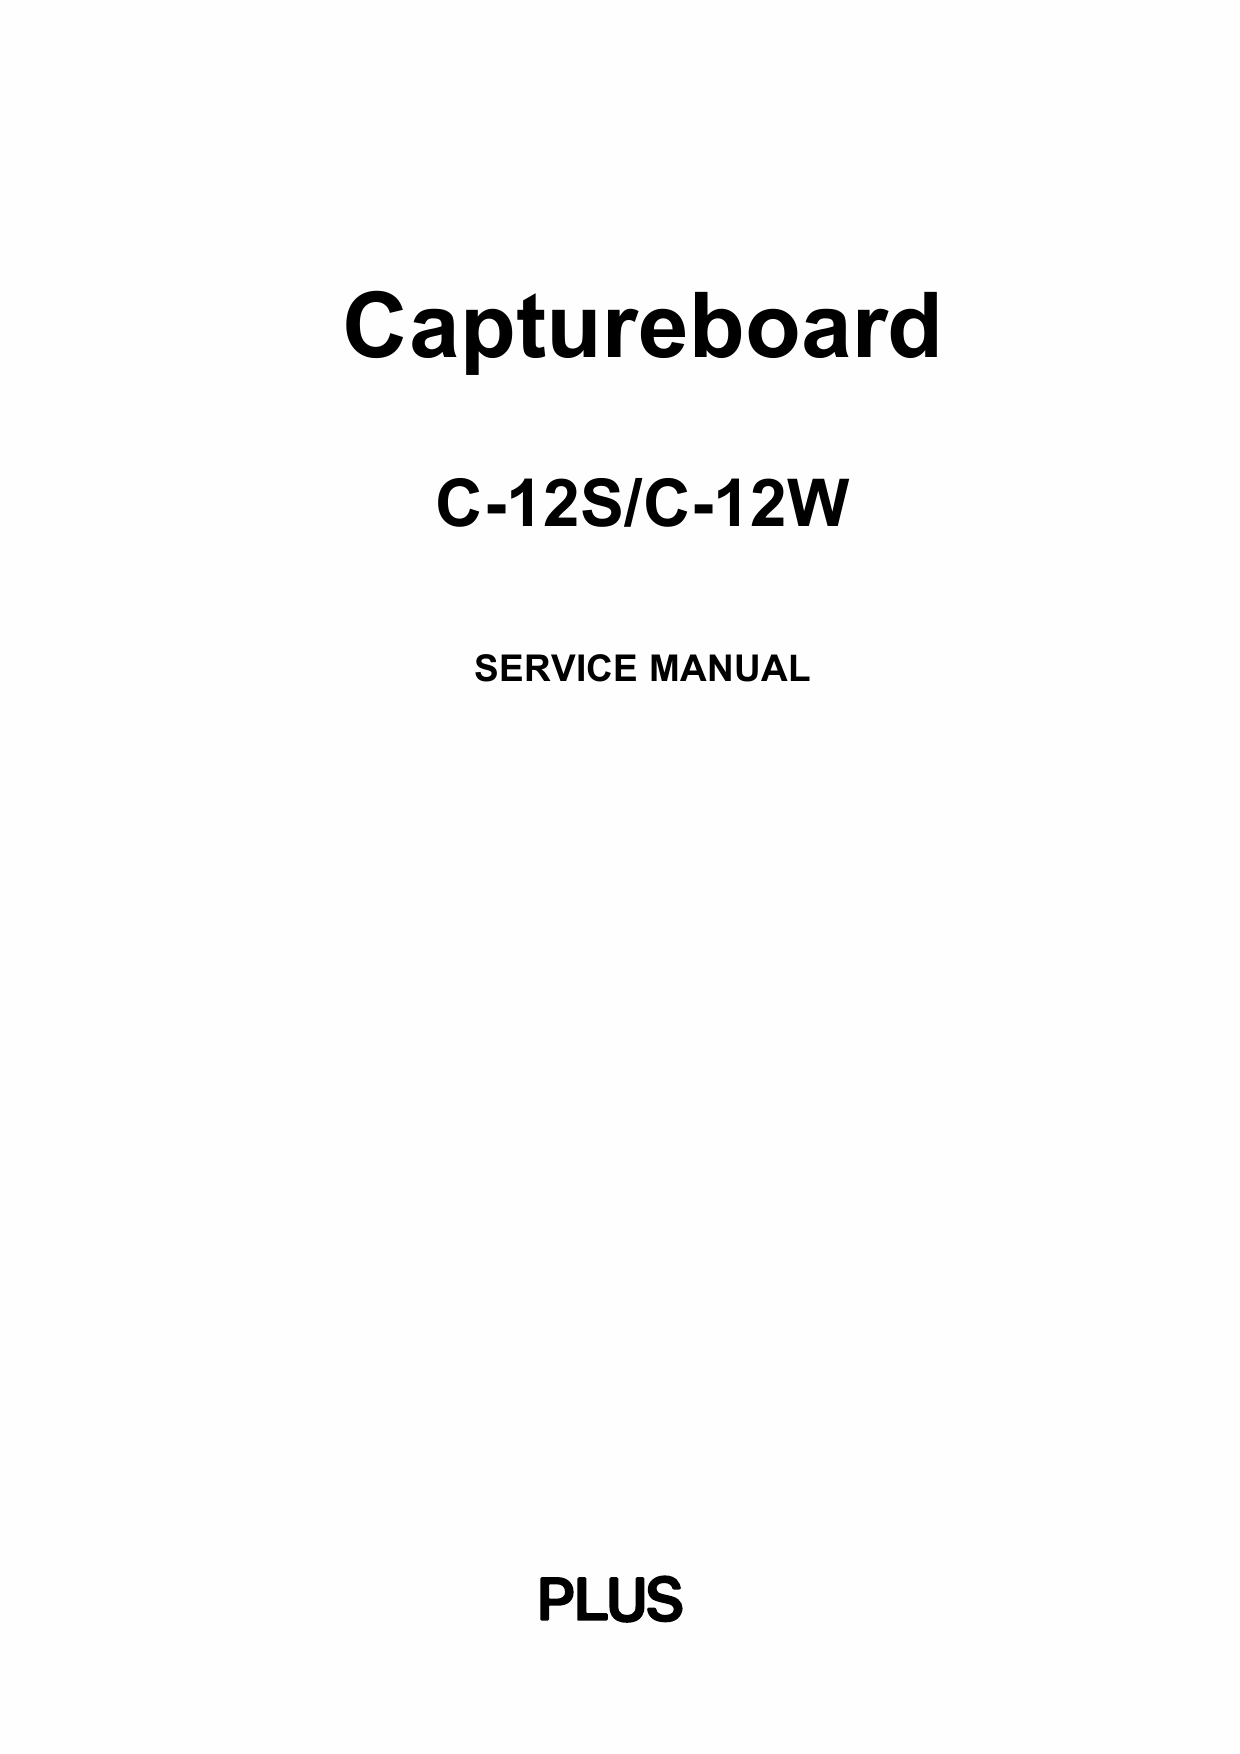 Konica-Minolta magicolor CaptureBoard C-12S C-12W Service Manual-1